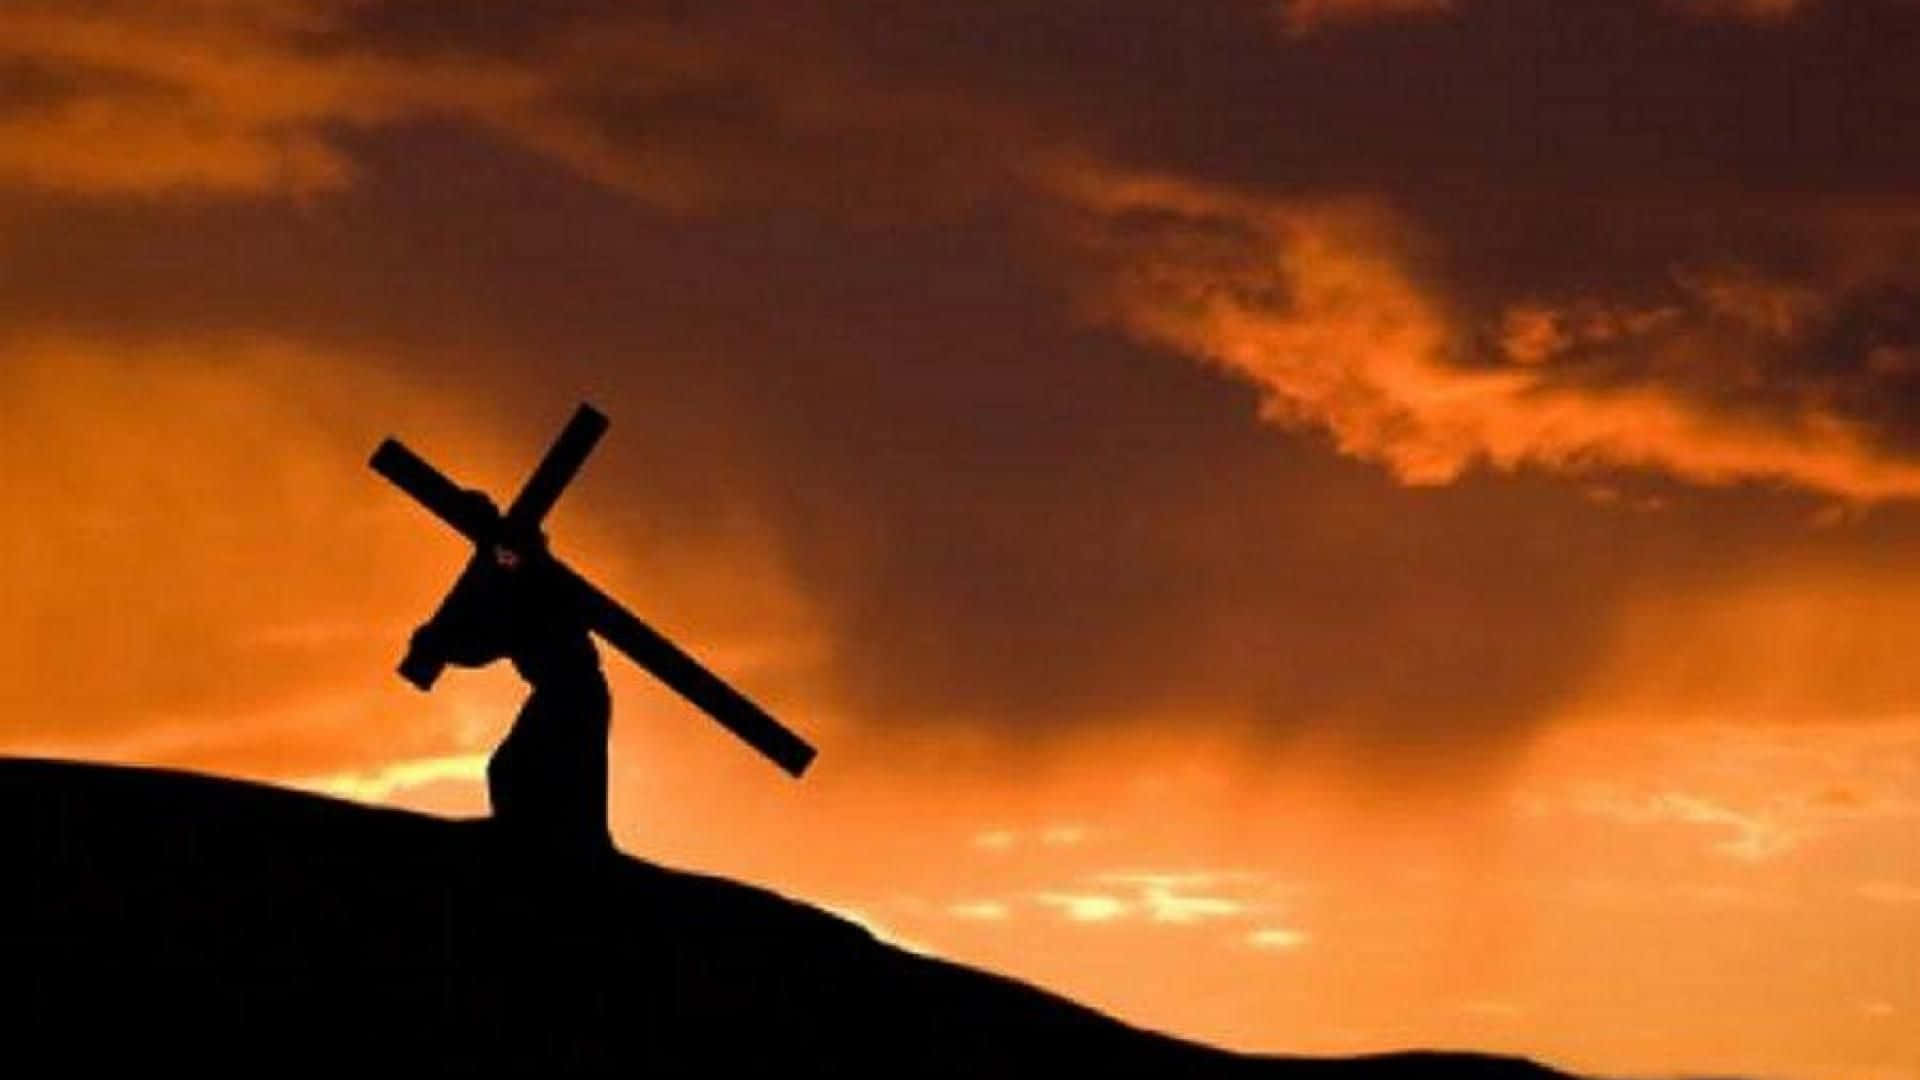 Jesus On The Cross Orange Sky Picture